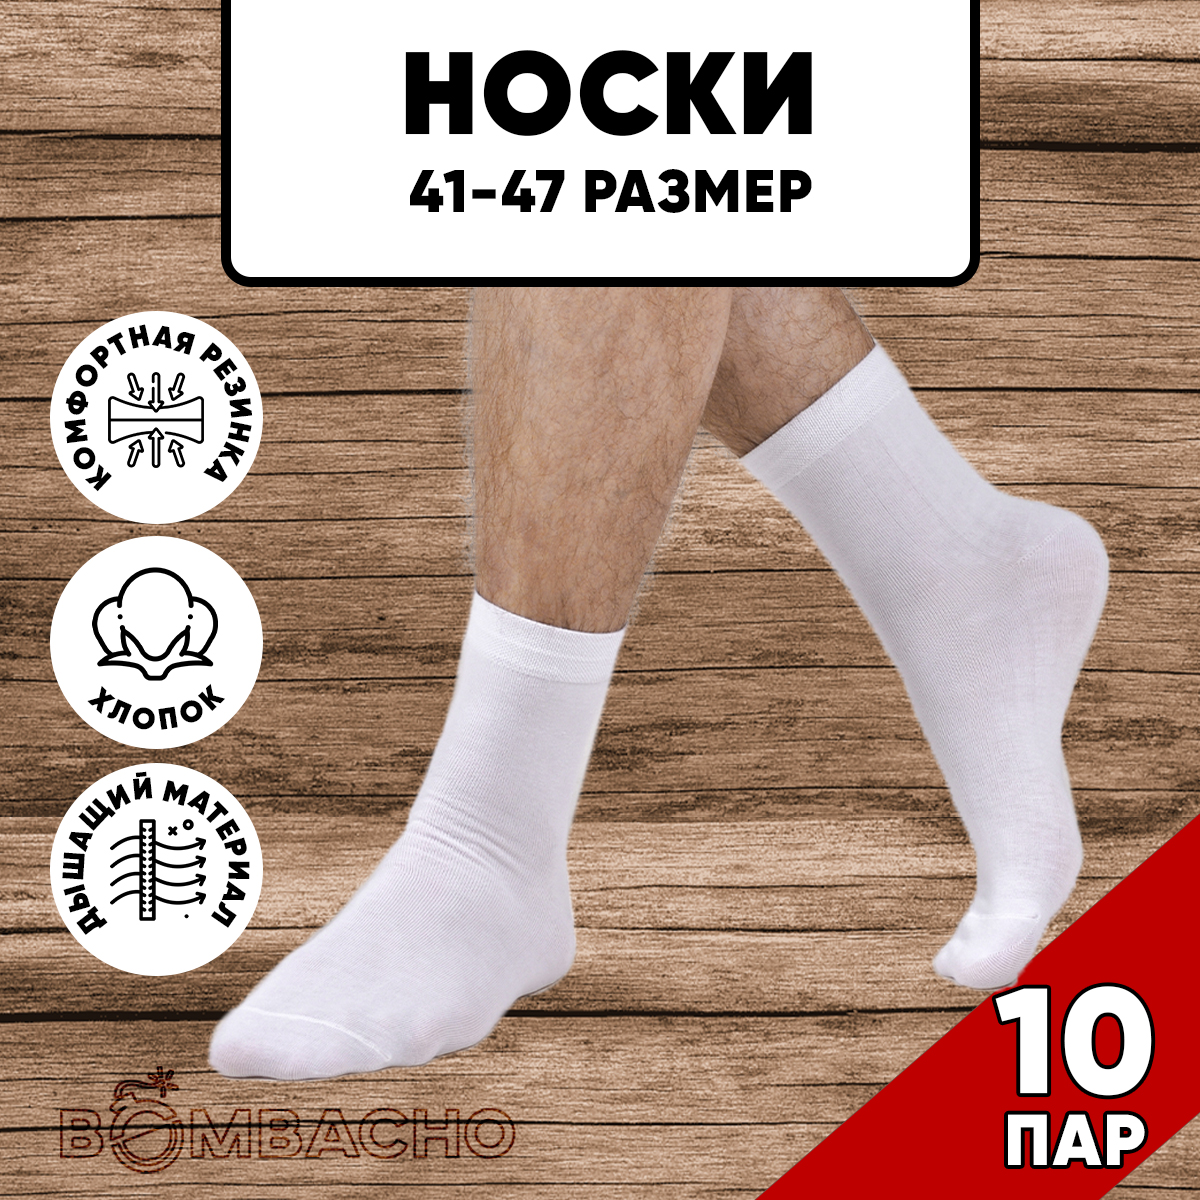 Комплект носков мужских BOMBACHO ЛЭЙНИ FASHION м10 белых 41-47, 10 пар